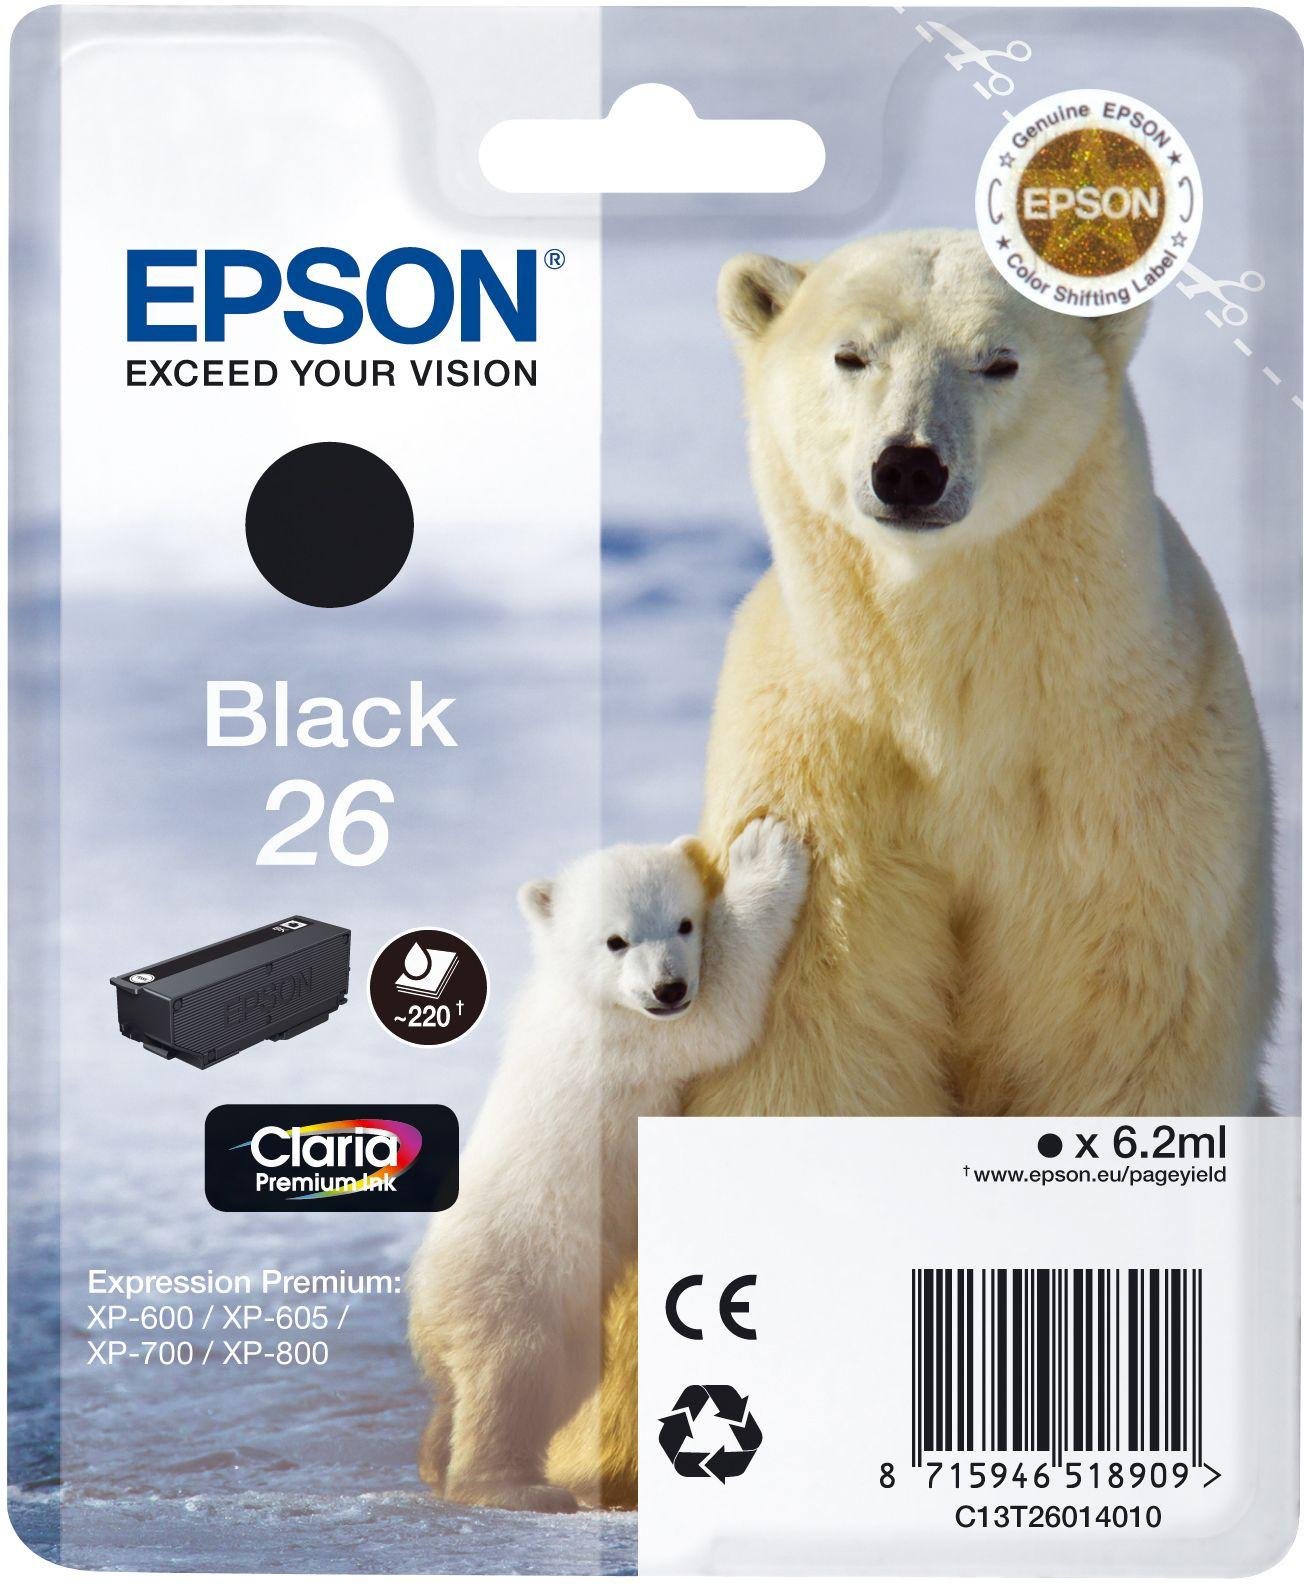 Epson Polar Bear 26 Black Ink Cartridge review